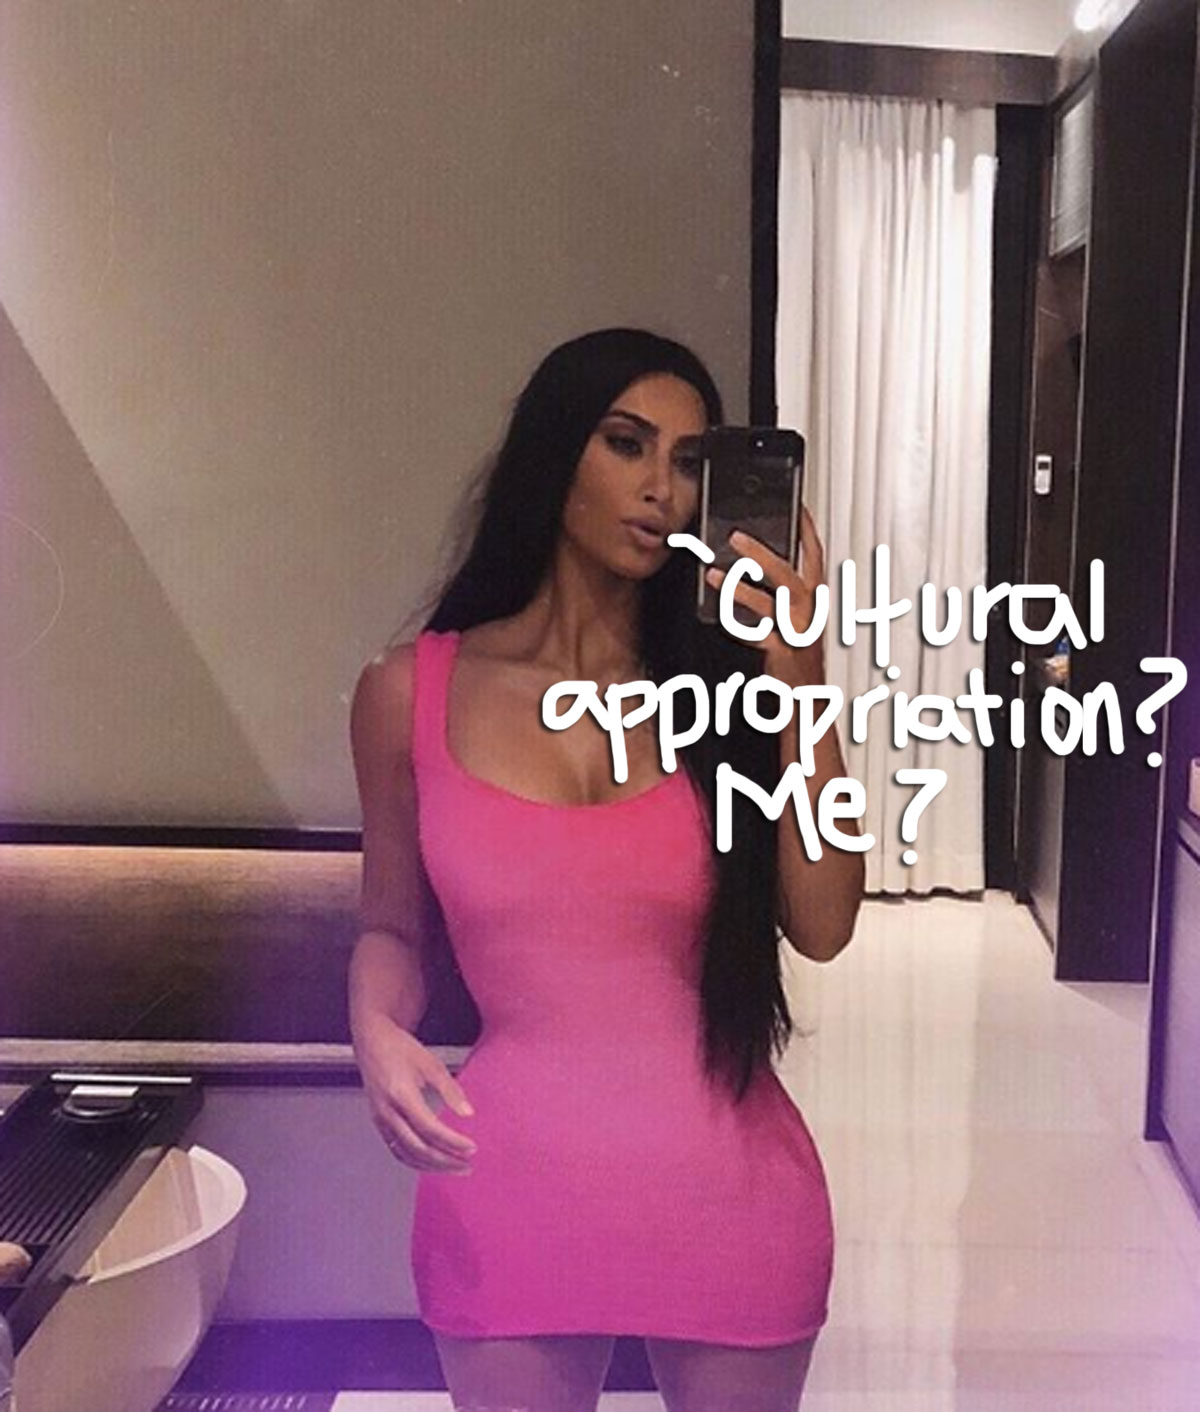 https://perezhilton.com/wp-content/uploads/2019/07/Kim-Kardashian-Cultural-Appropriation-Instagram.jpg